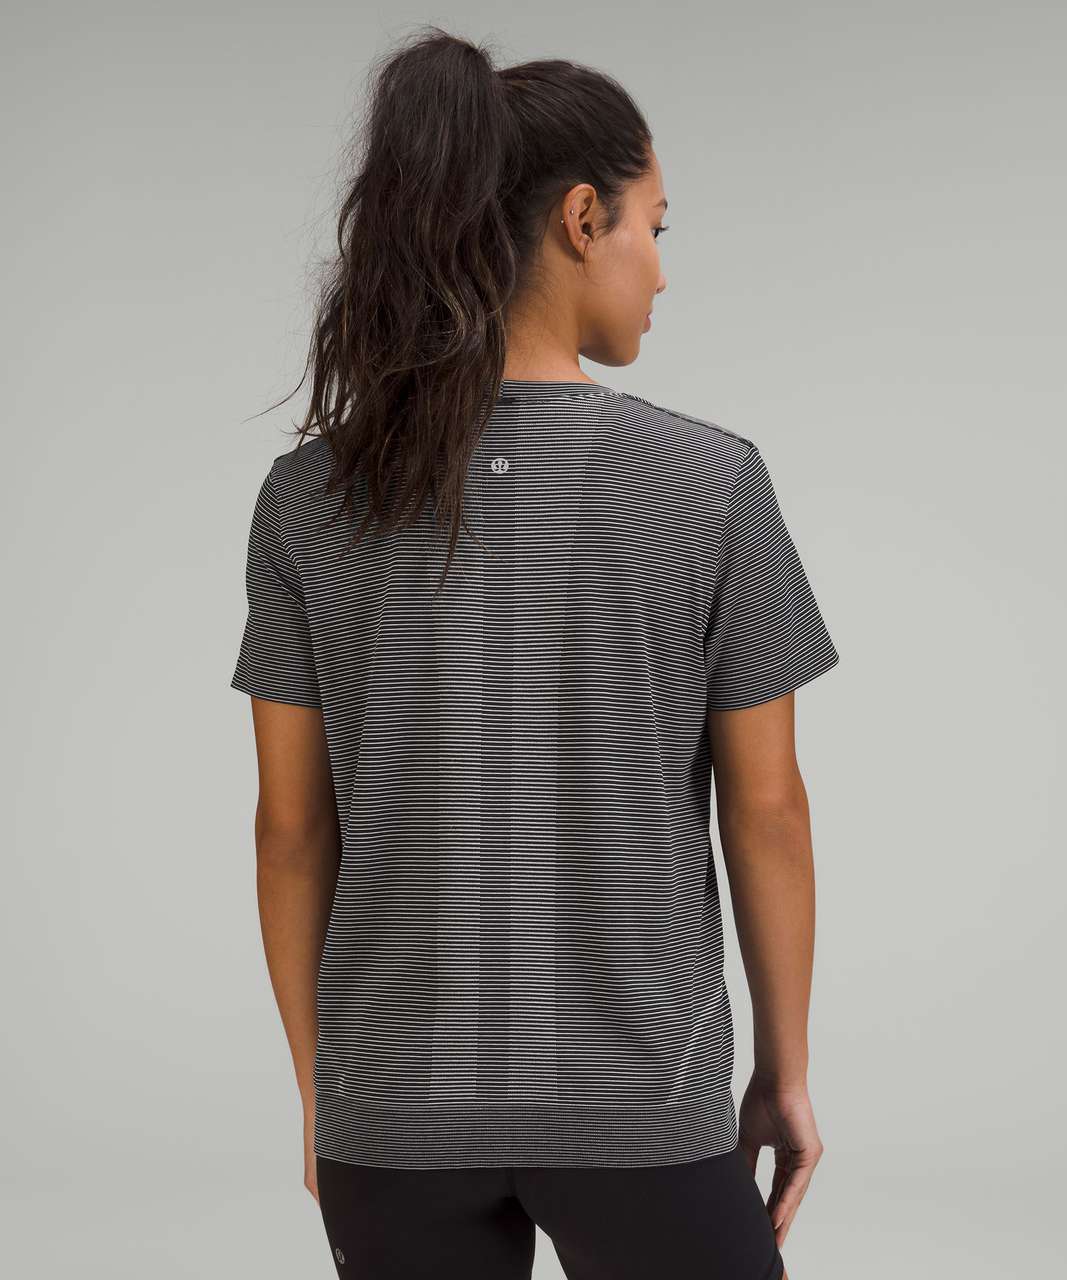 Lululemon Swiftly Relaxed-Fit Short Sleeve T-Shirt - Tempo Stripe Black / White